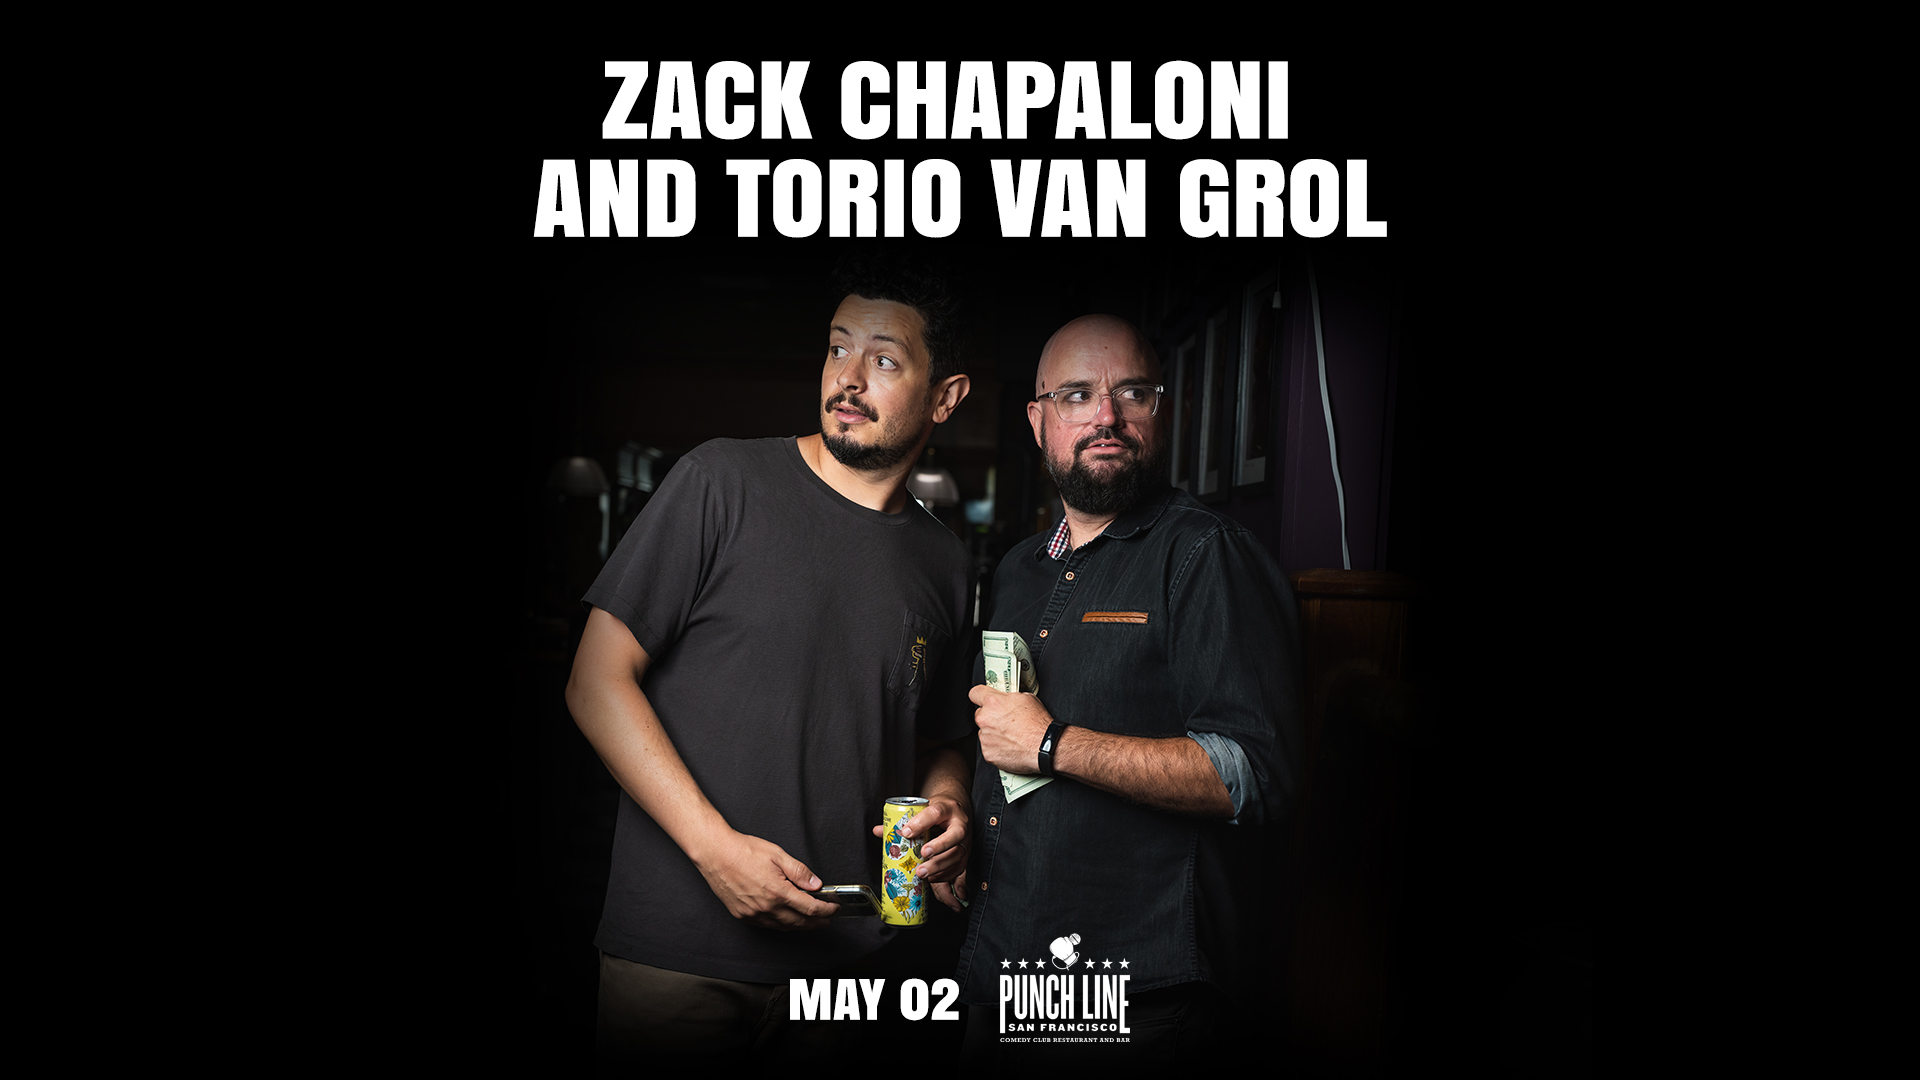 Zack Chapaloni and Torio Van Grol